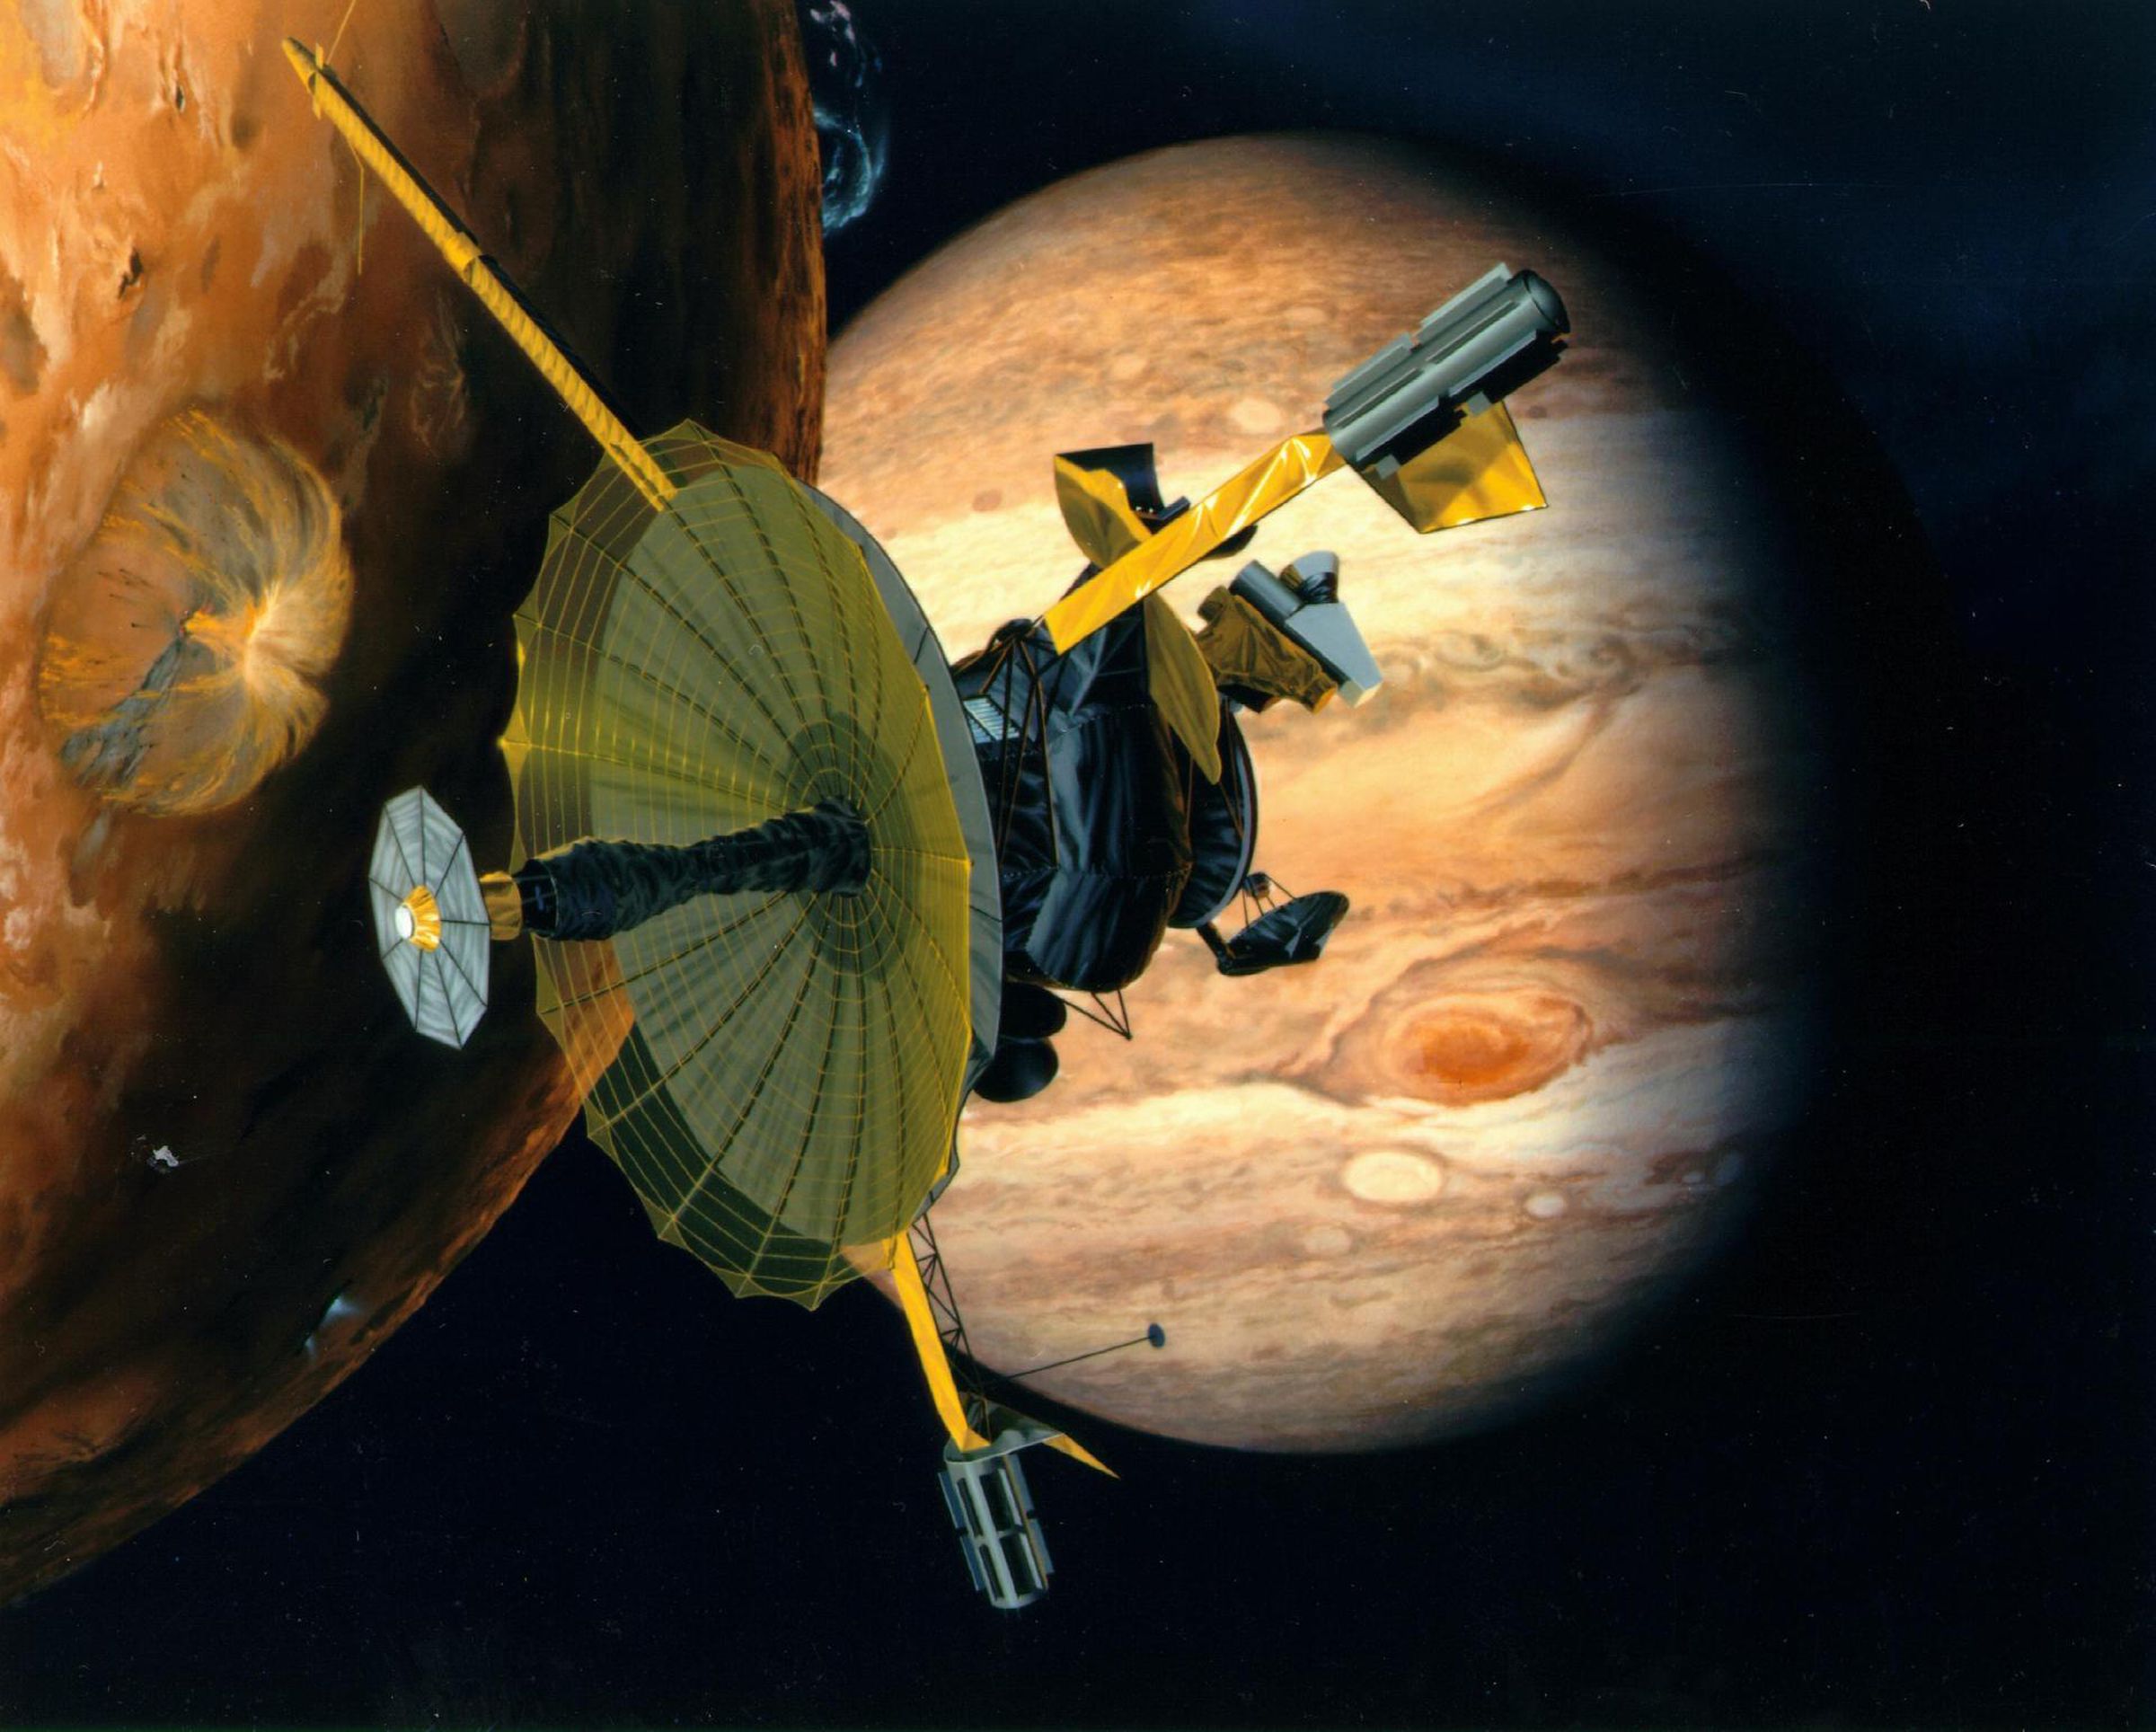 An artistic rendering of NASA’s Galileo spacecraft